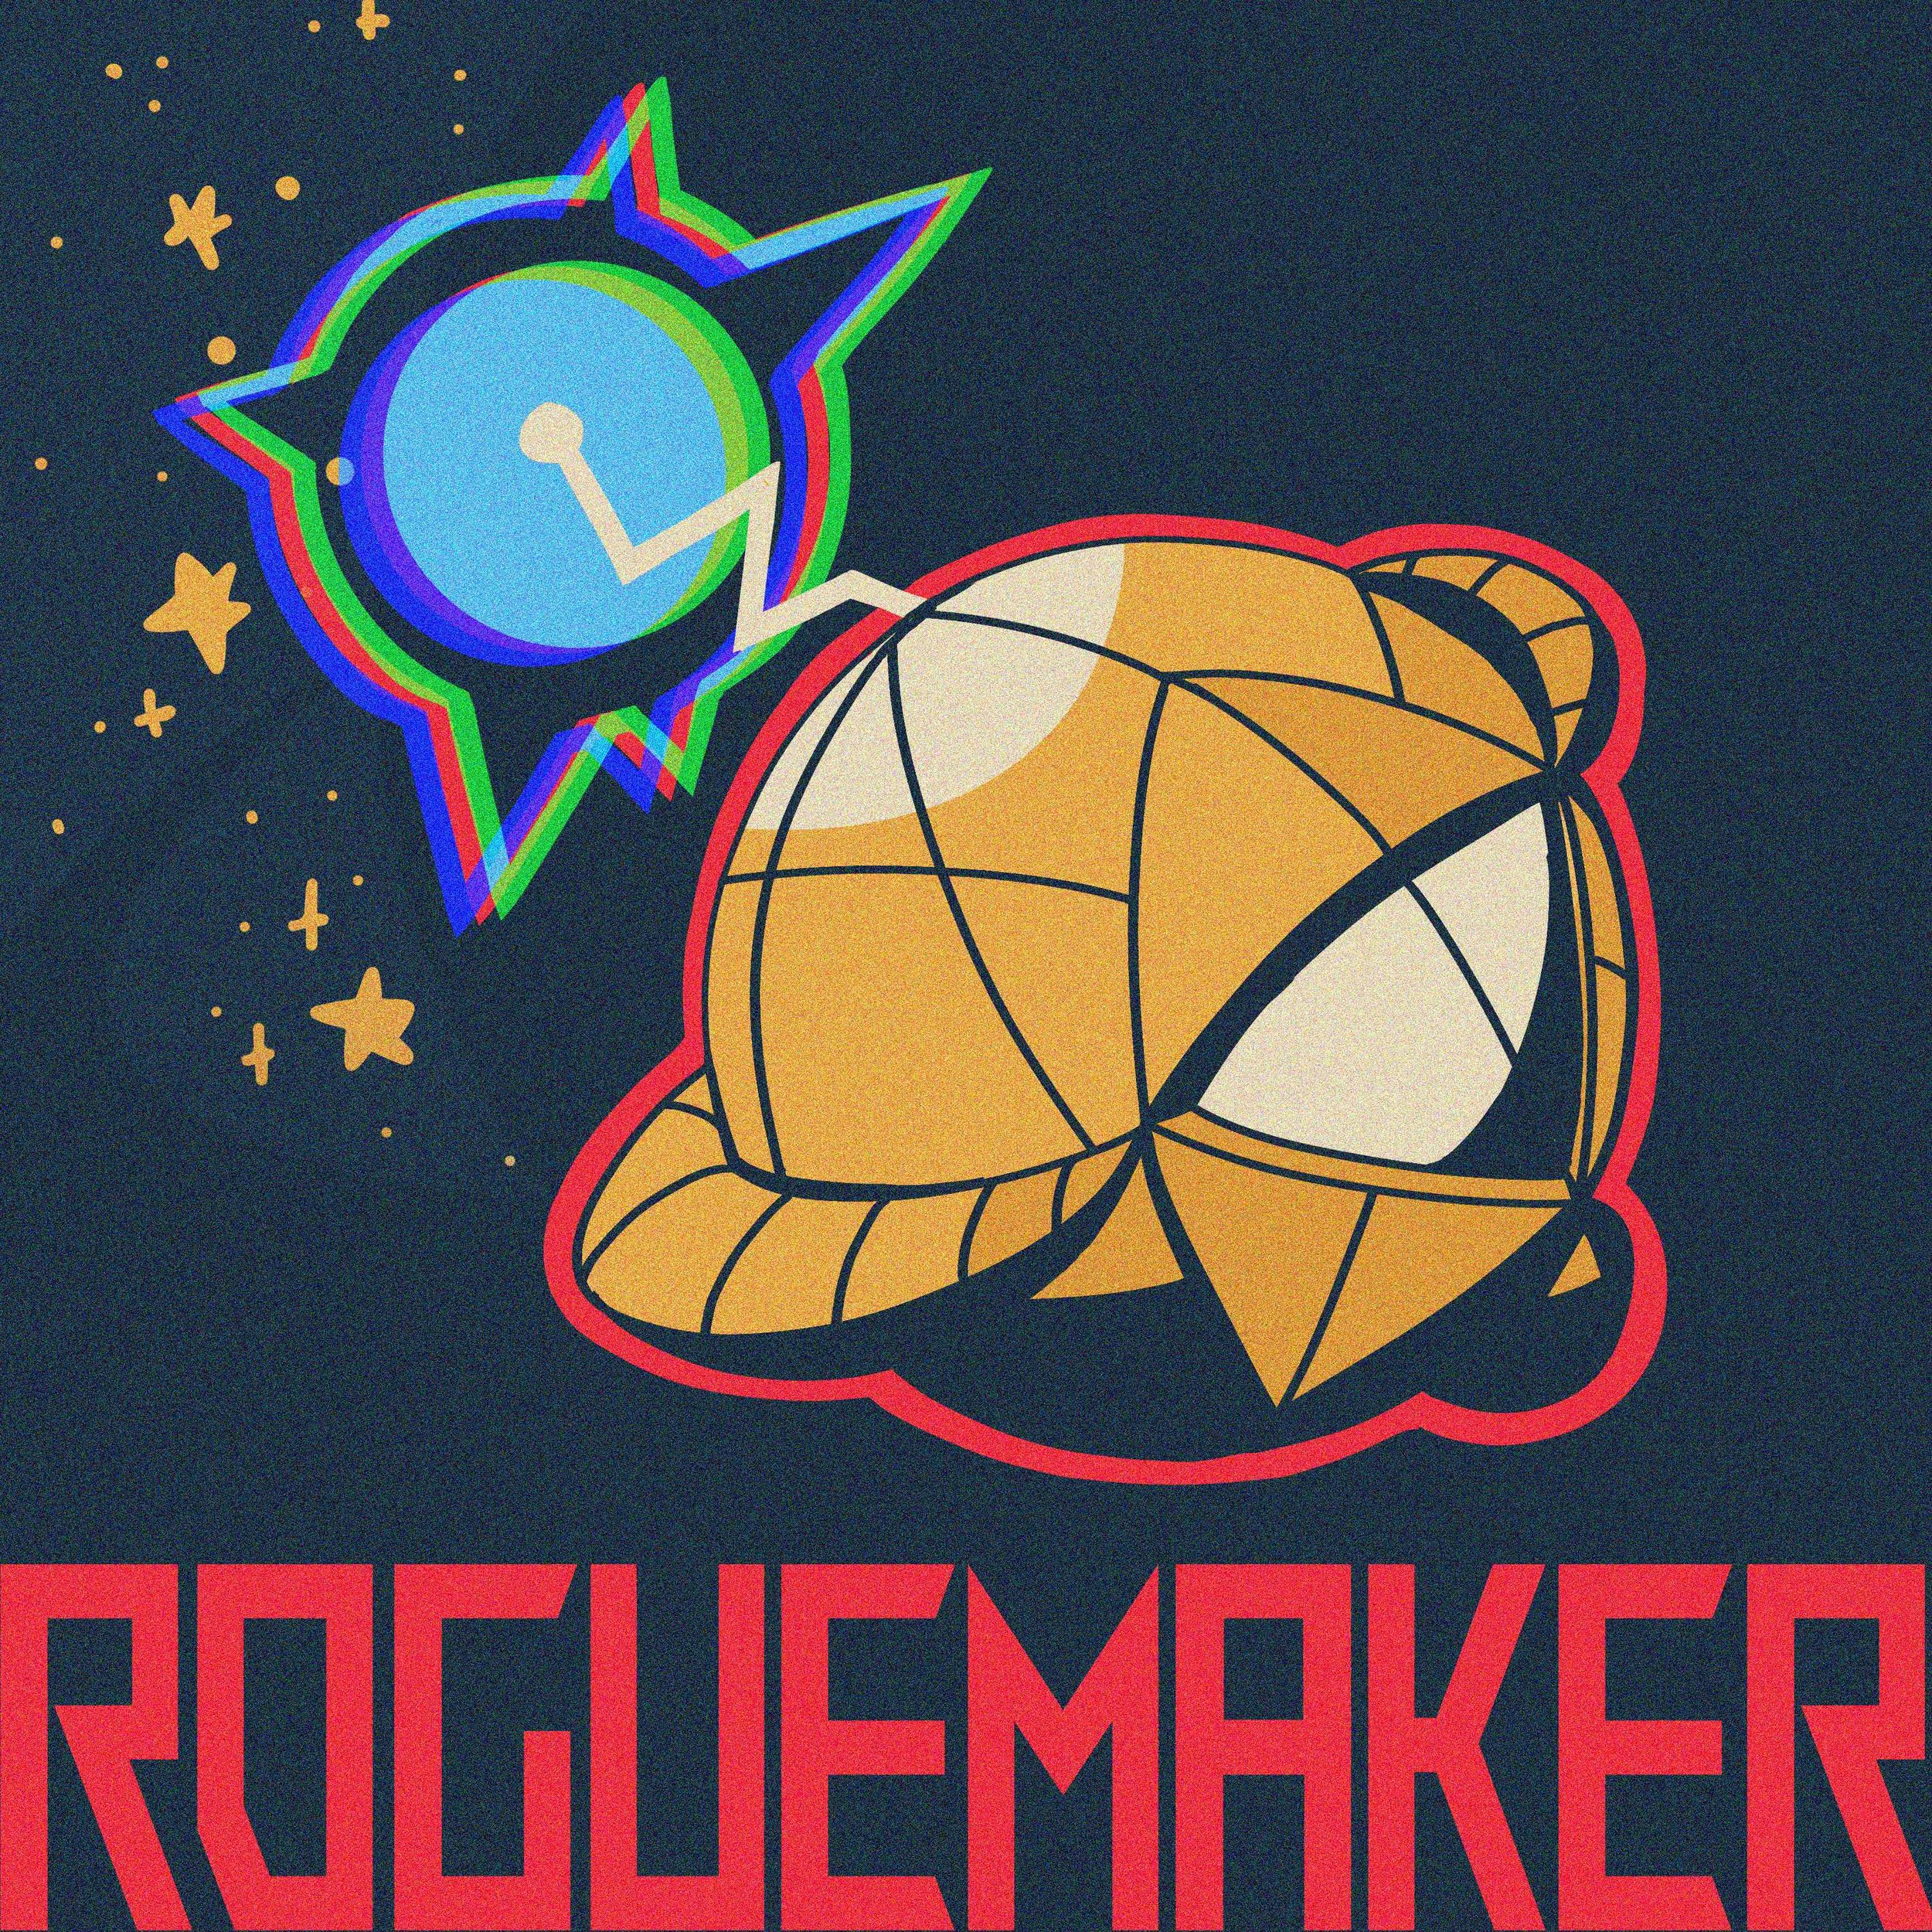 Roguemaker.jpg